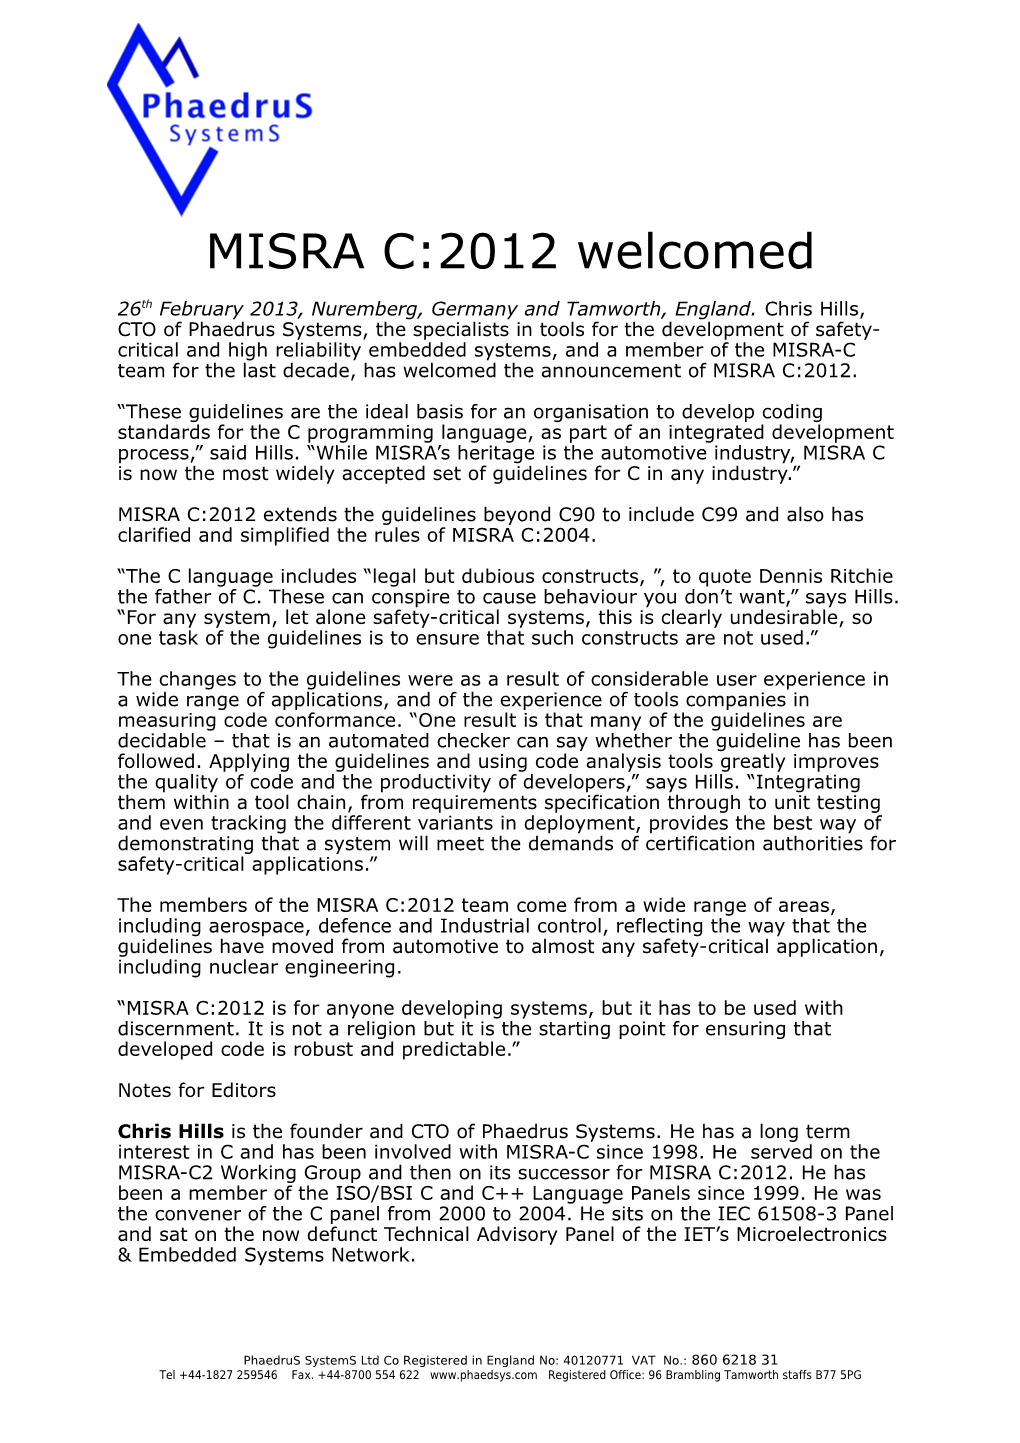 MISRA C:2012 Welcomed